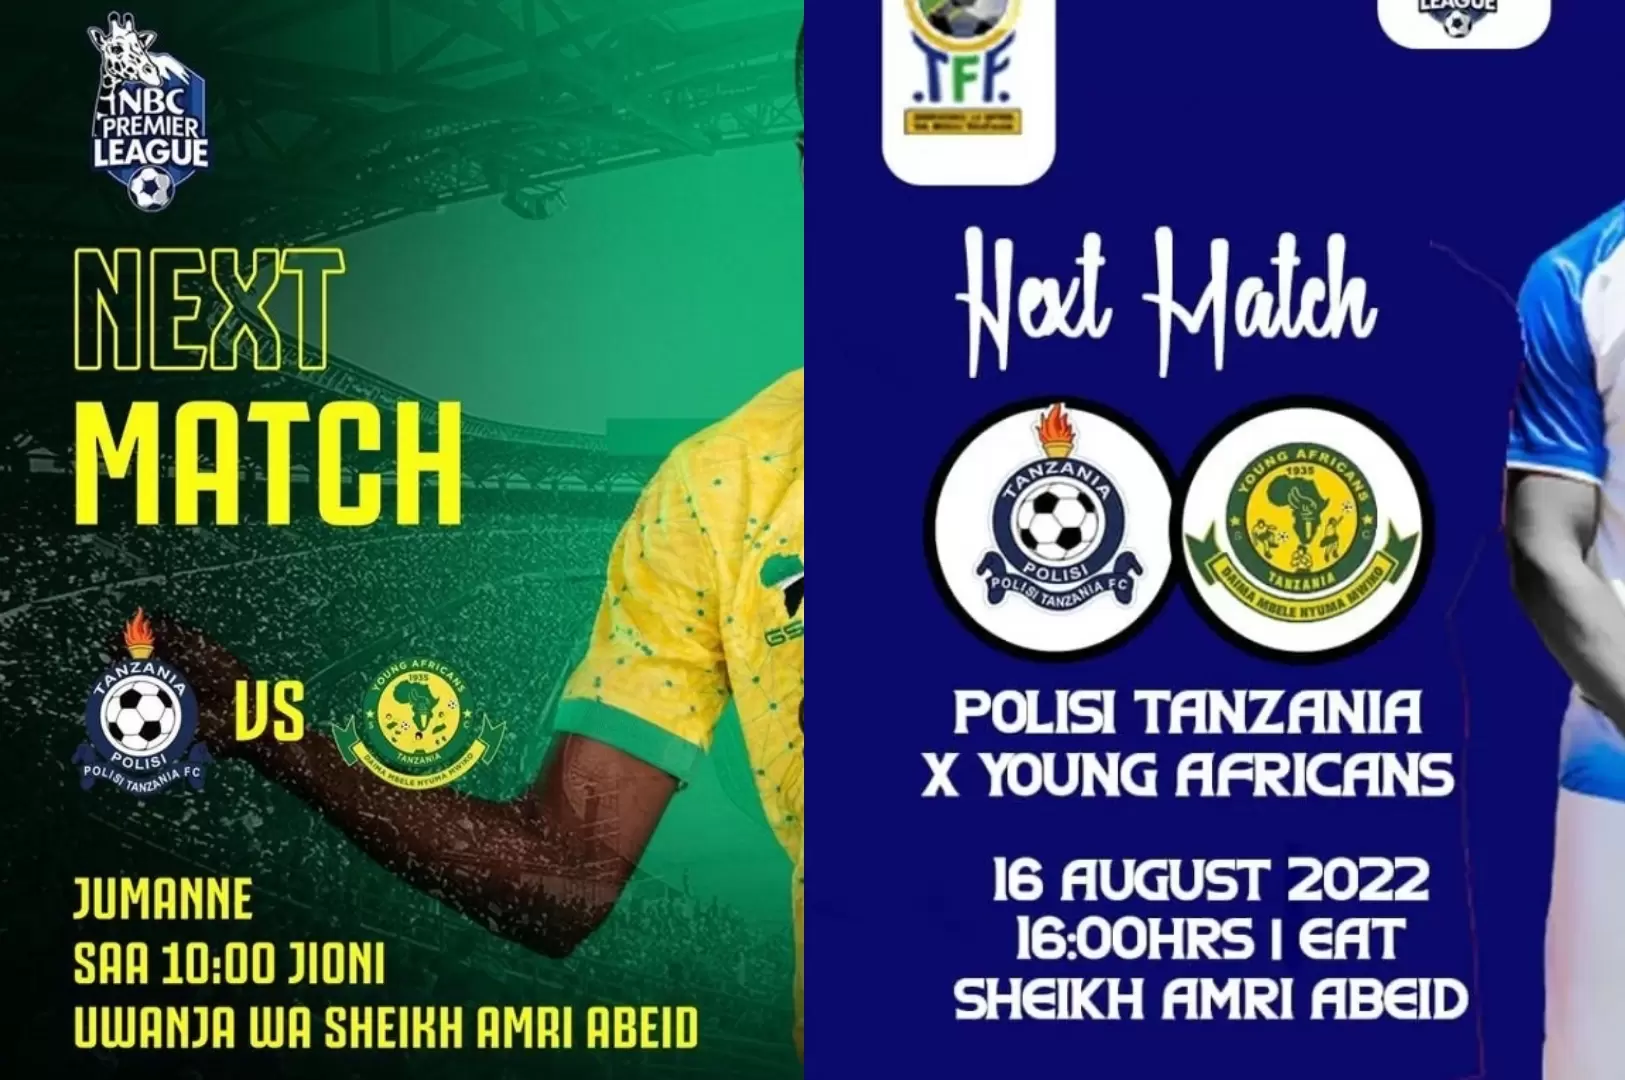 Matokeo Polisi Tanzania Vs Yanga NBC Premier League (Live updates)